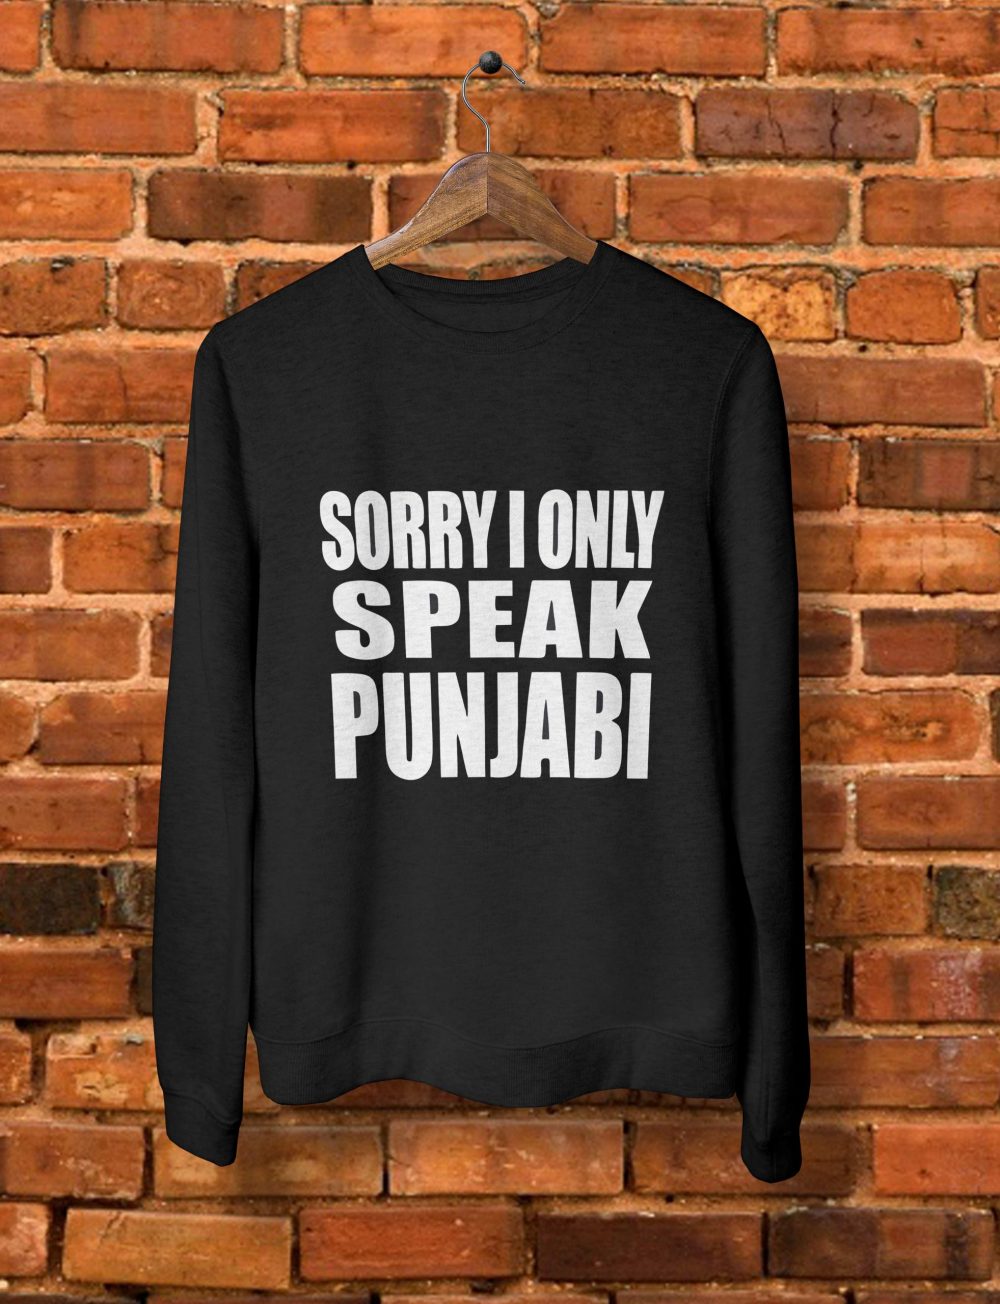 Sorry I Only Speak Punjabi Sweatshirt by Teez Mar Khan - Pickshop.pk